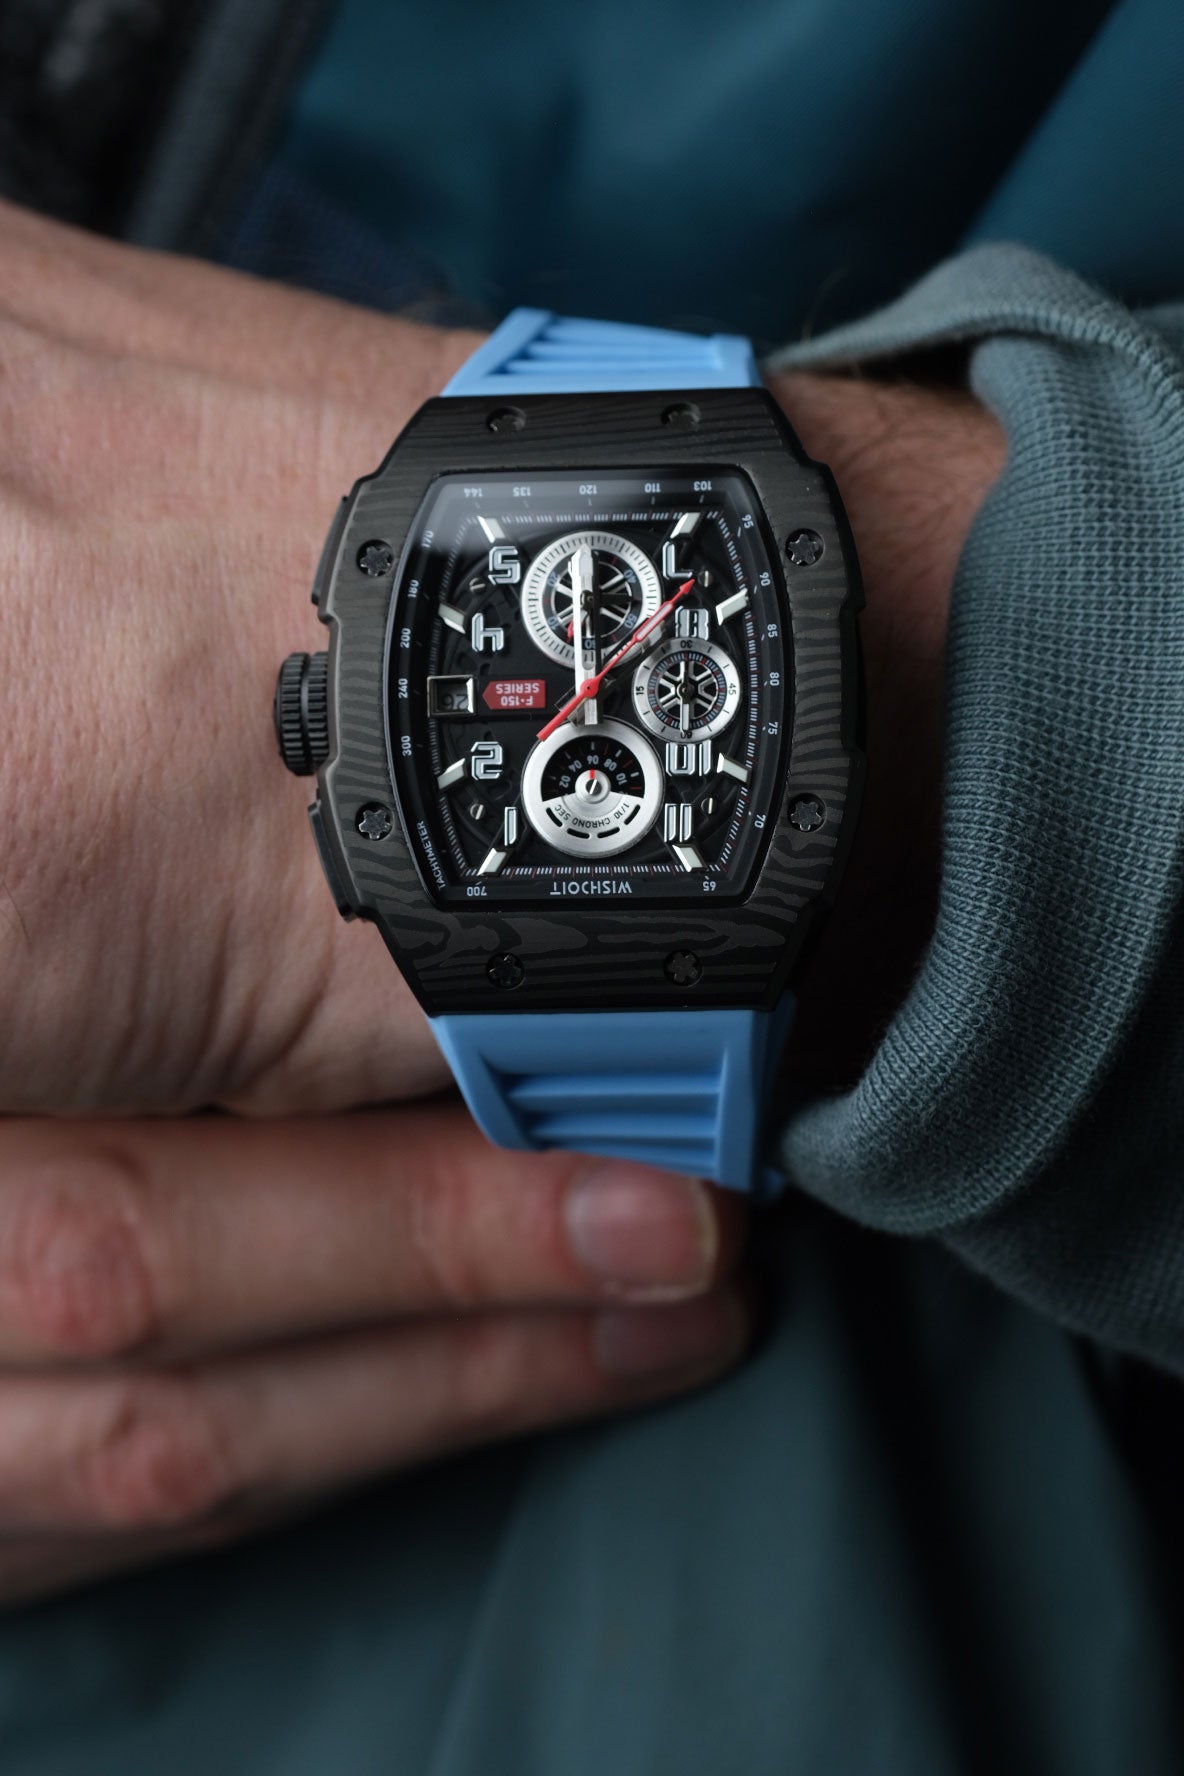 f-150 chronograph watch : Shop chronograph watch for men | Wishdoit watches